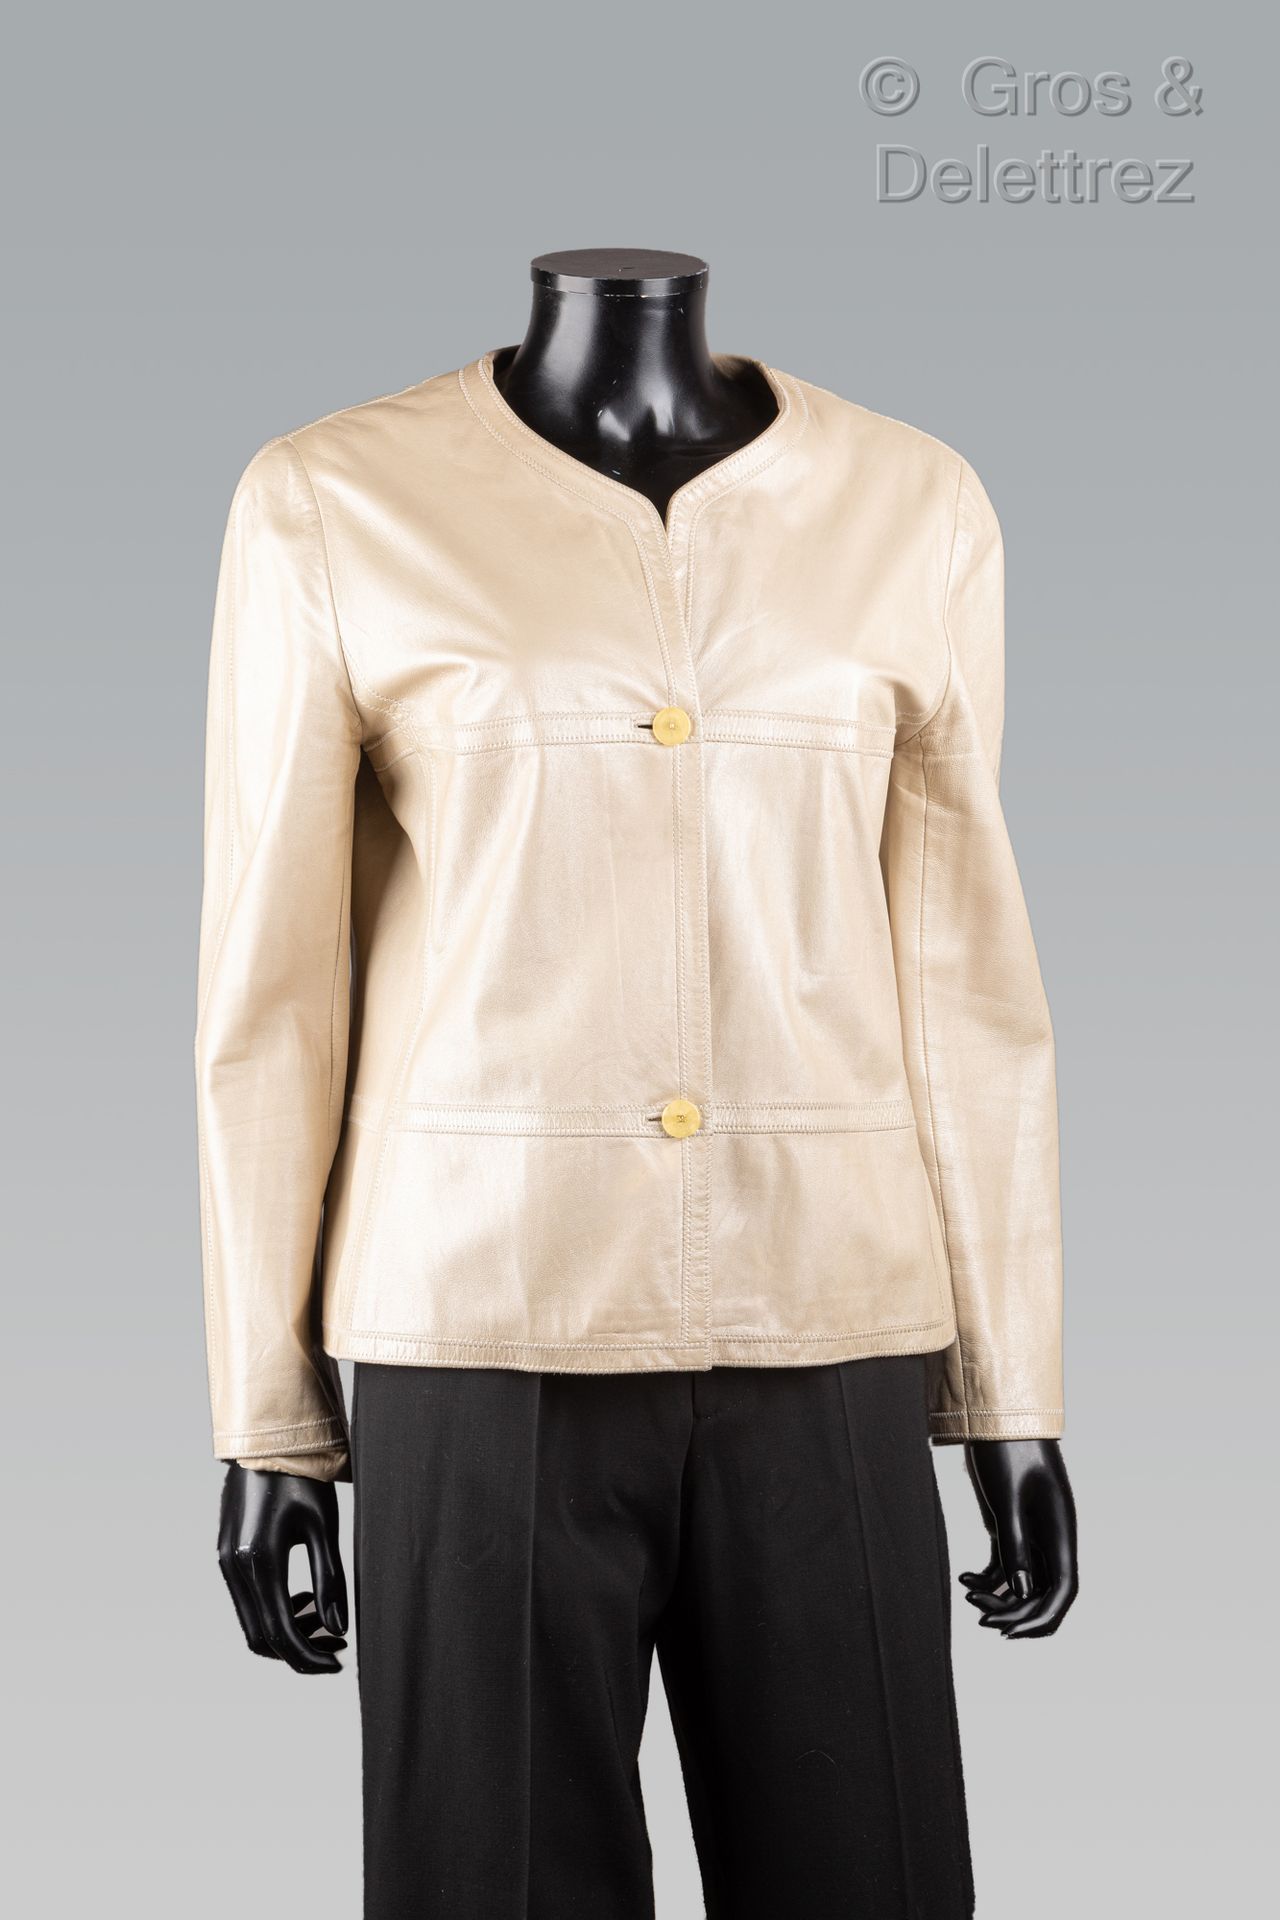 Null 卡尔-拉格斐的香奈儿专卖店

1999年春/夏系列

珍珠色皮夹克，圆领，单排扣，长袖。白色标签，黑色图案。T.44.状况良好（有小的痕迹）。